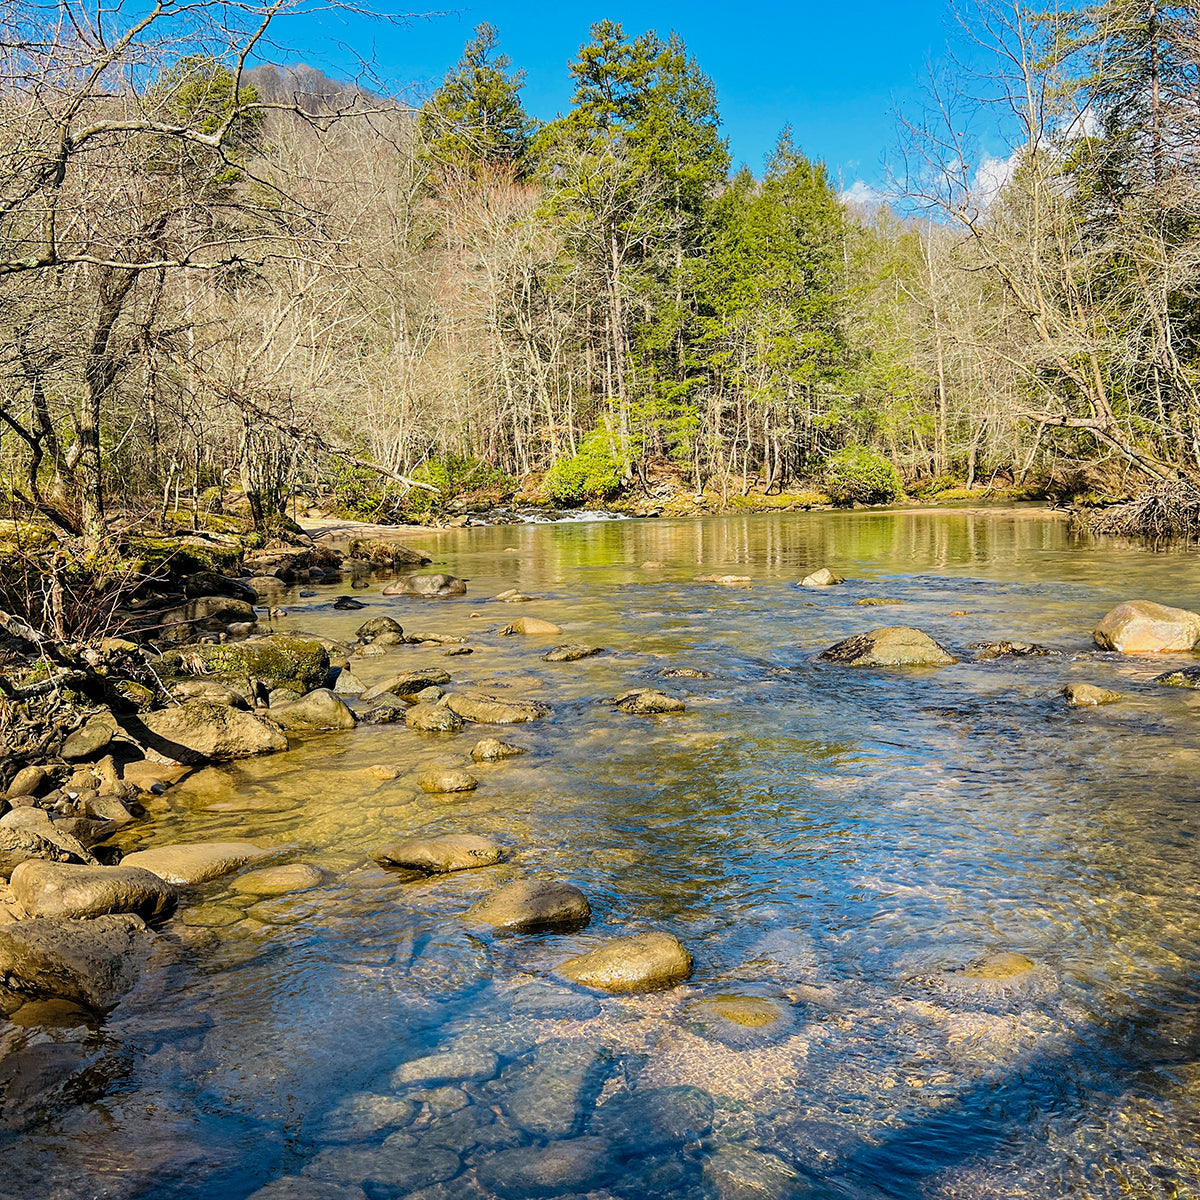 Green River in North Carolina